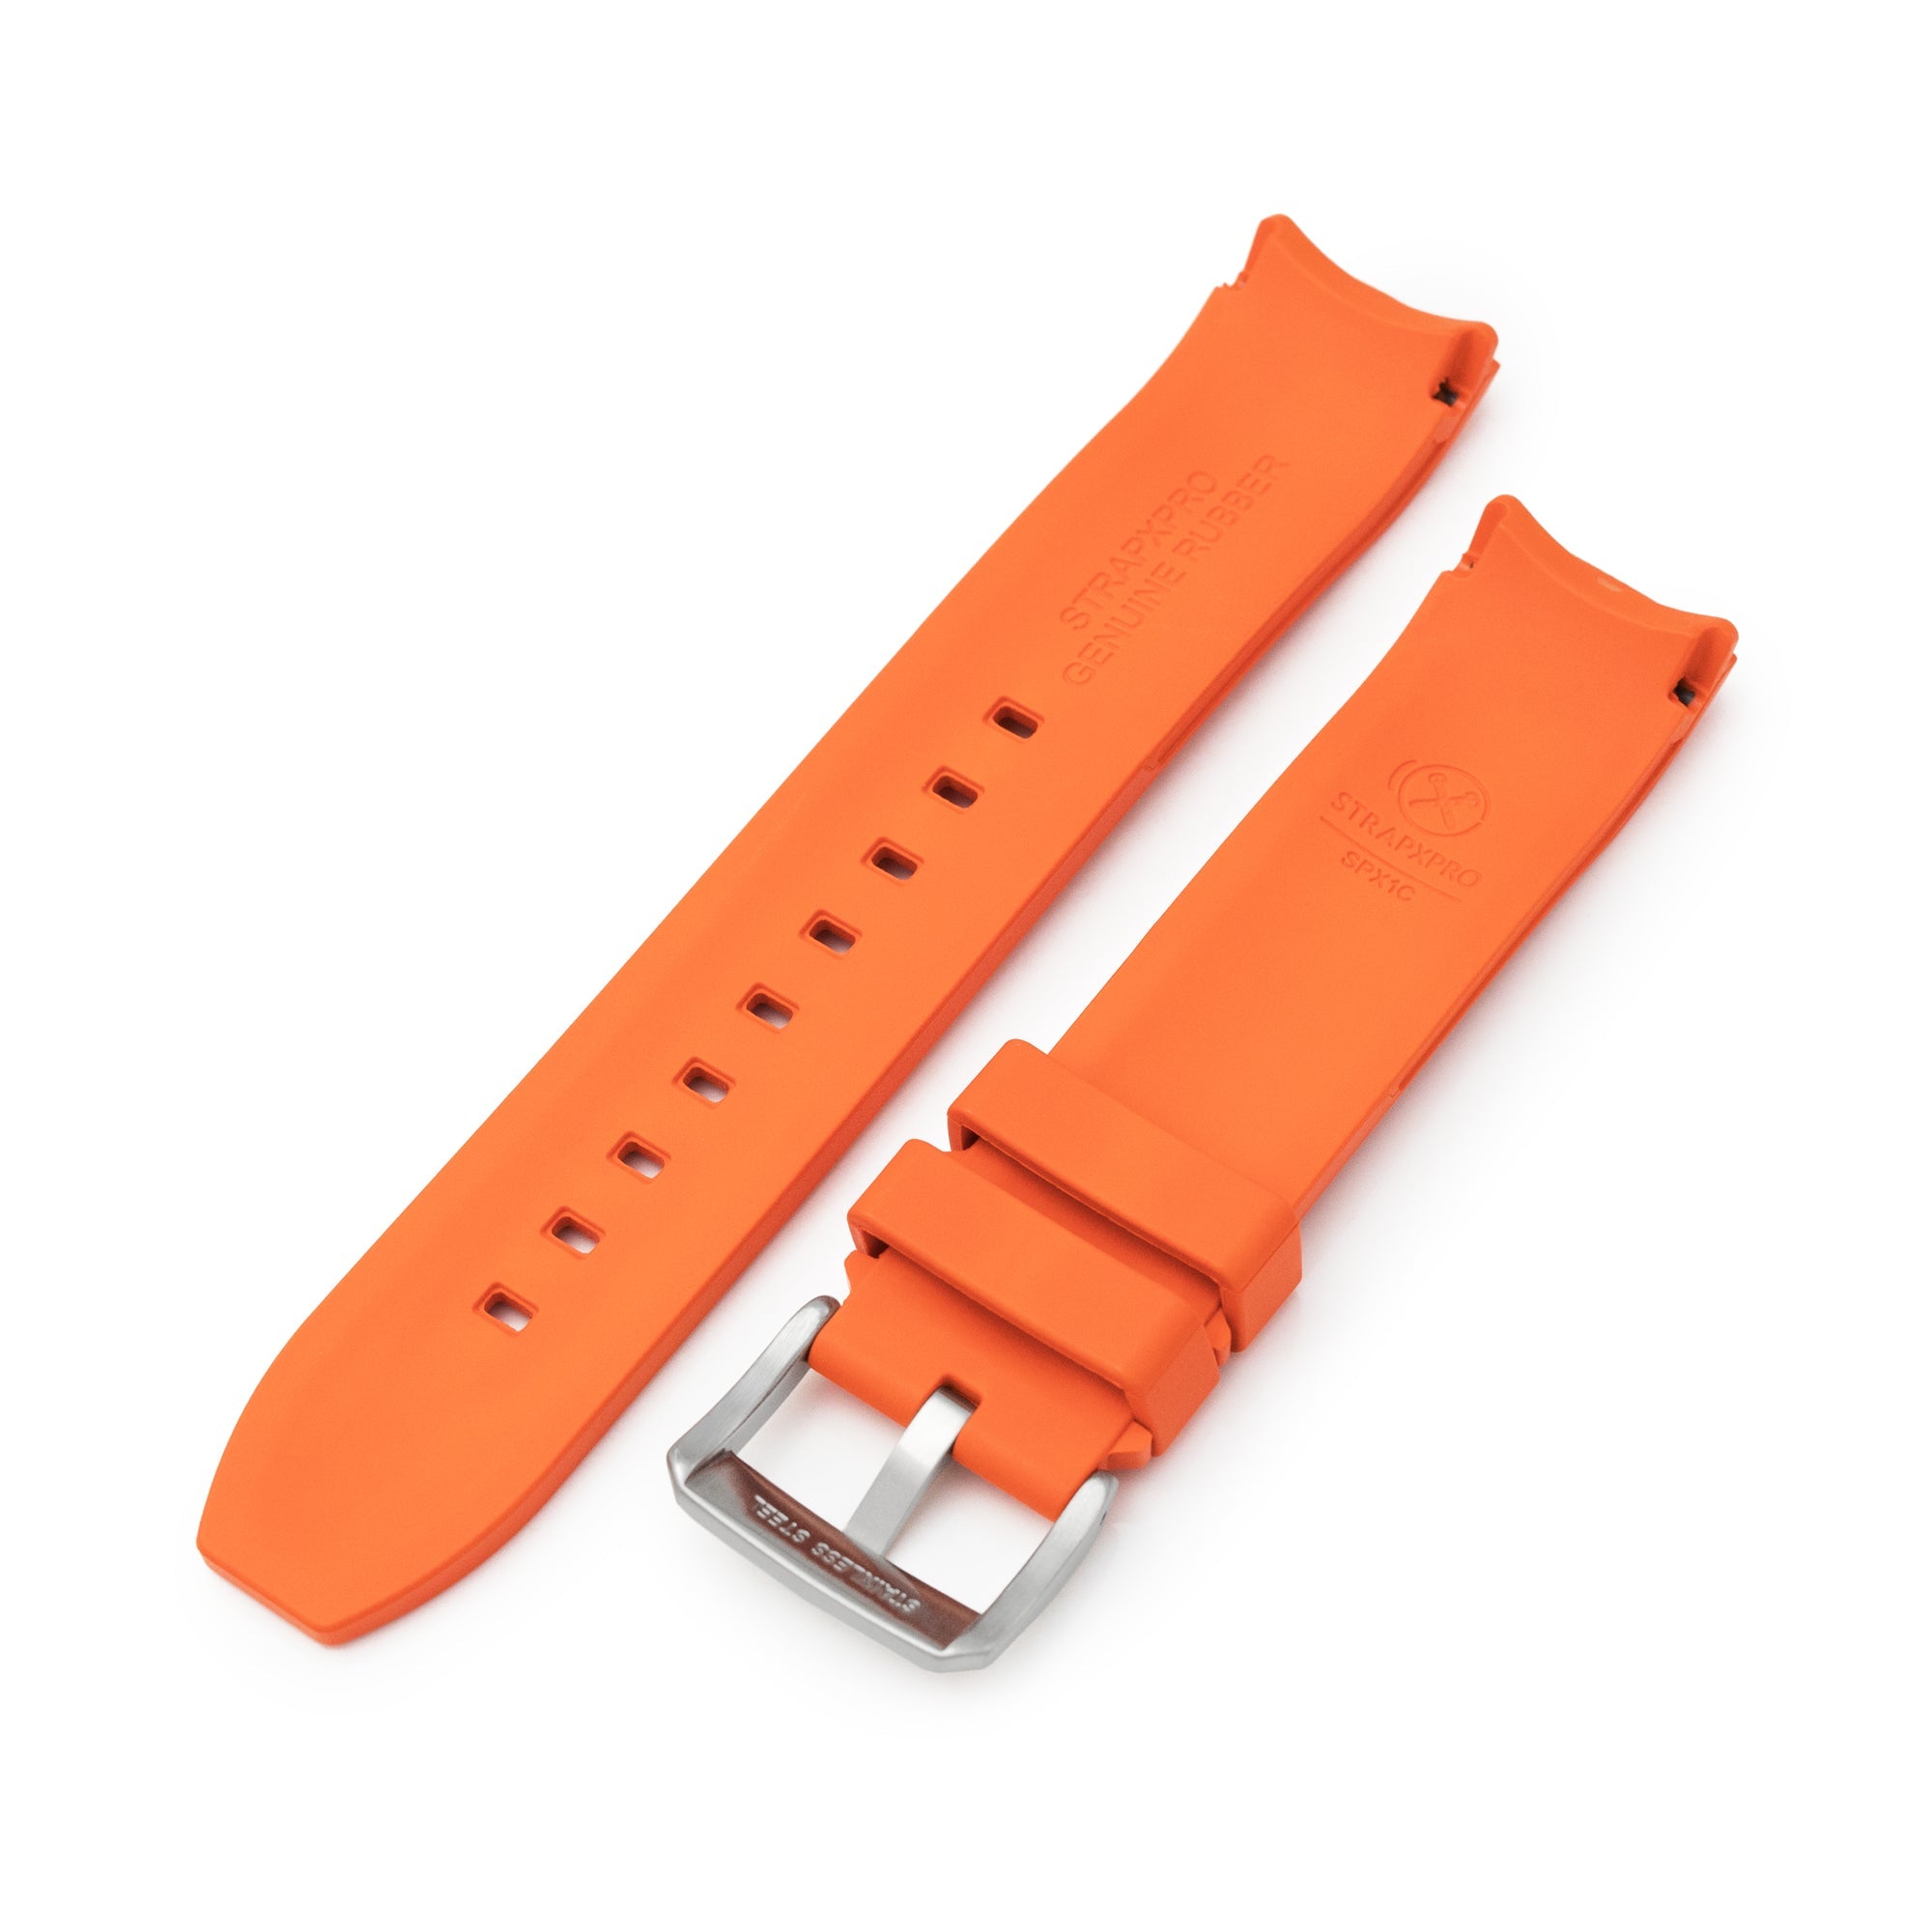 StrapXPro - SPX1C Rubber Strap For Seiko 62MAS (63Mas) SPB/SBDC Series, Orange Strapcode watch bands